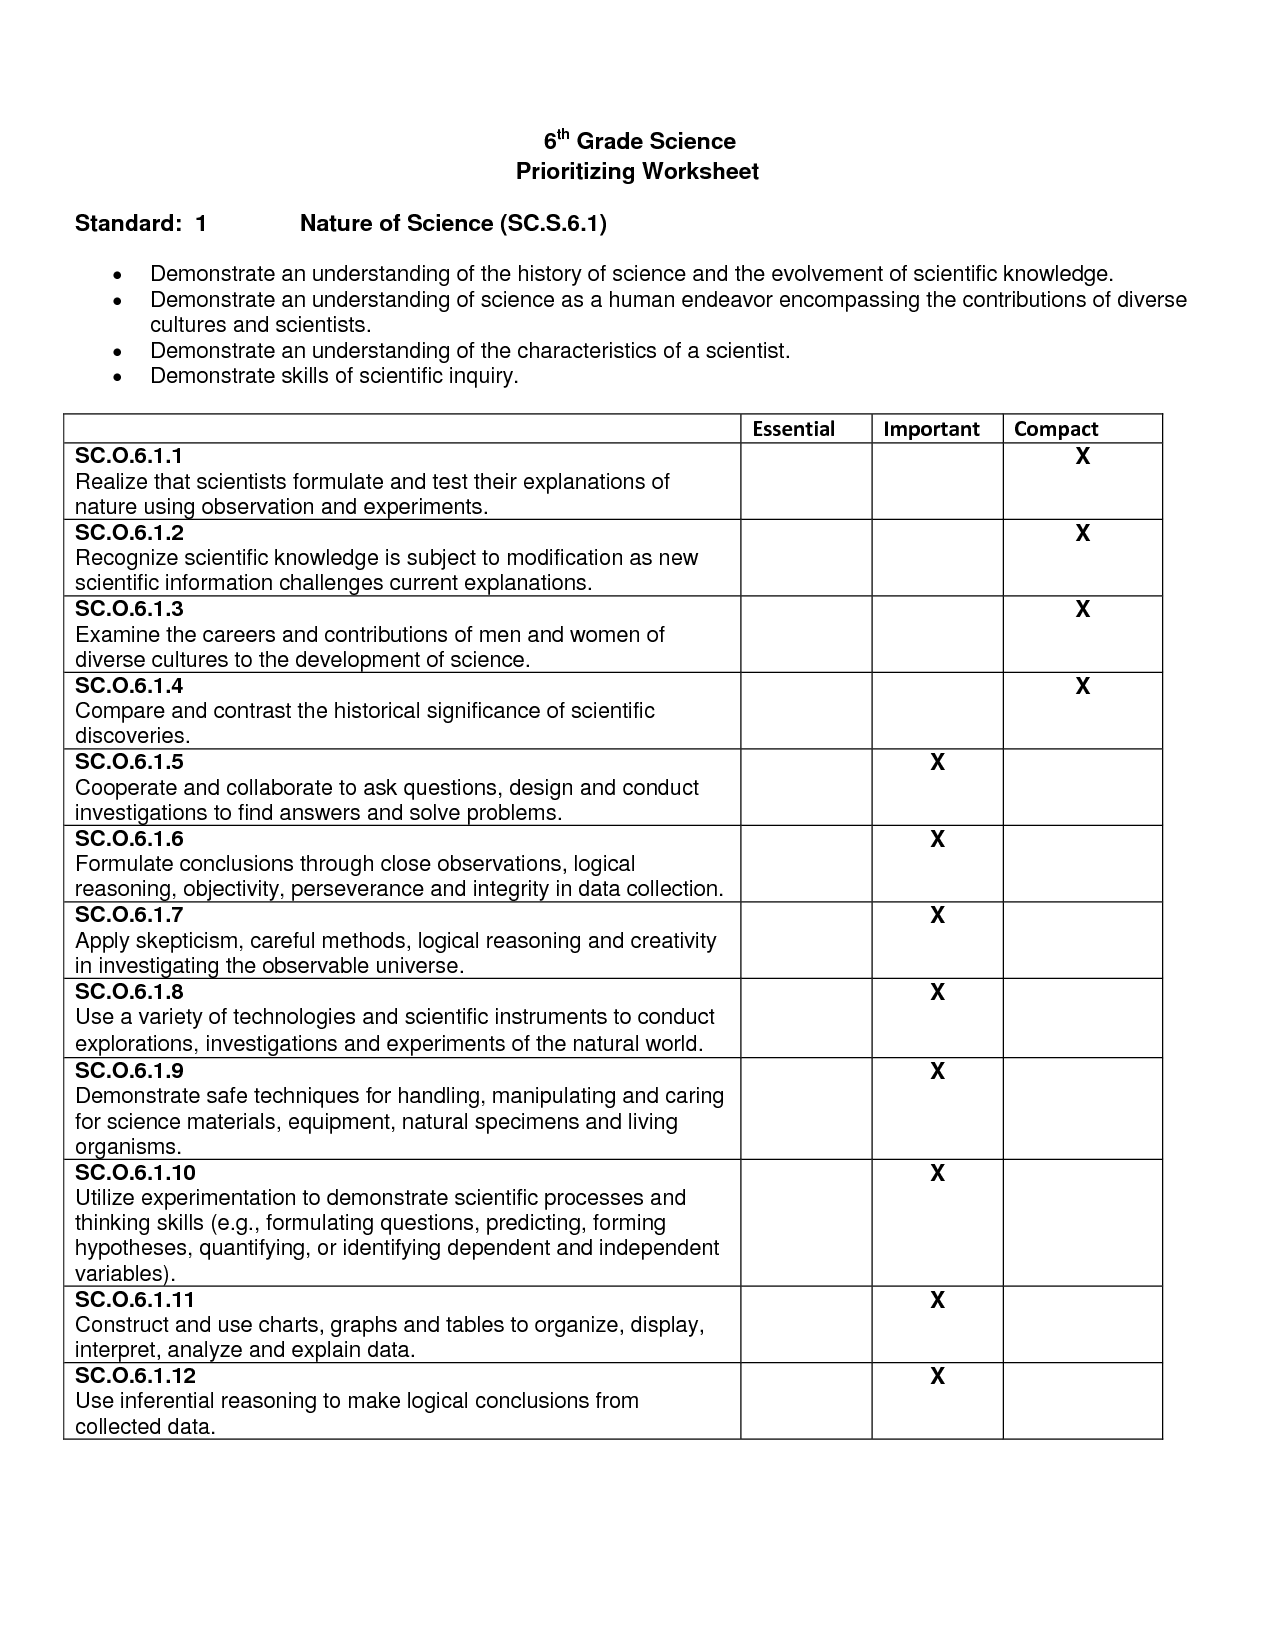 11-fronts-worksheet-answer-key-worksheeto